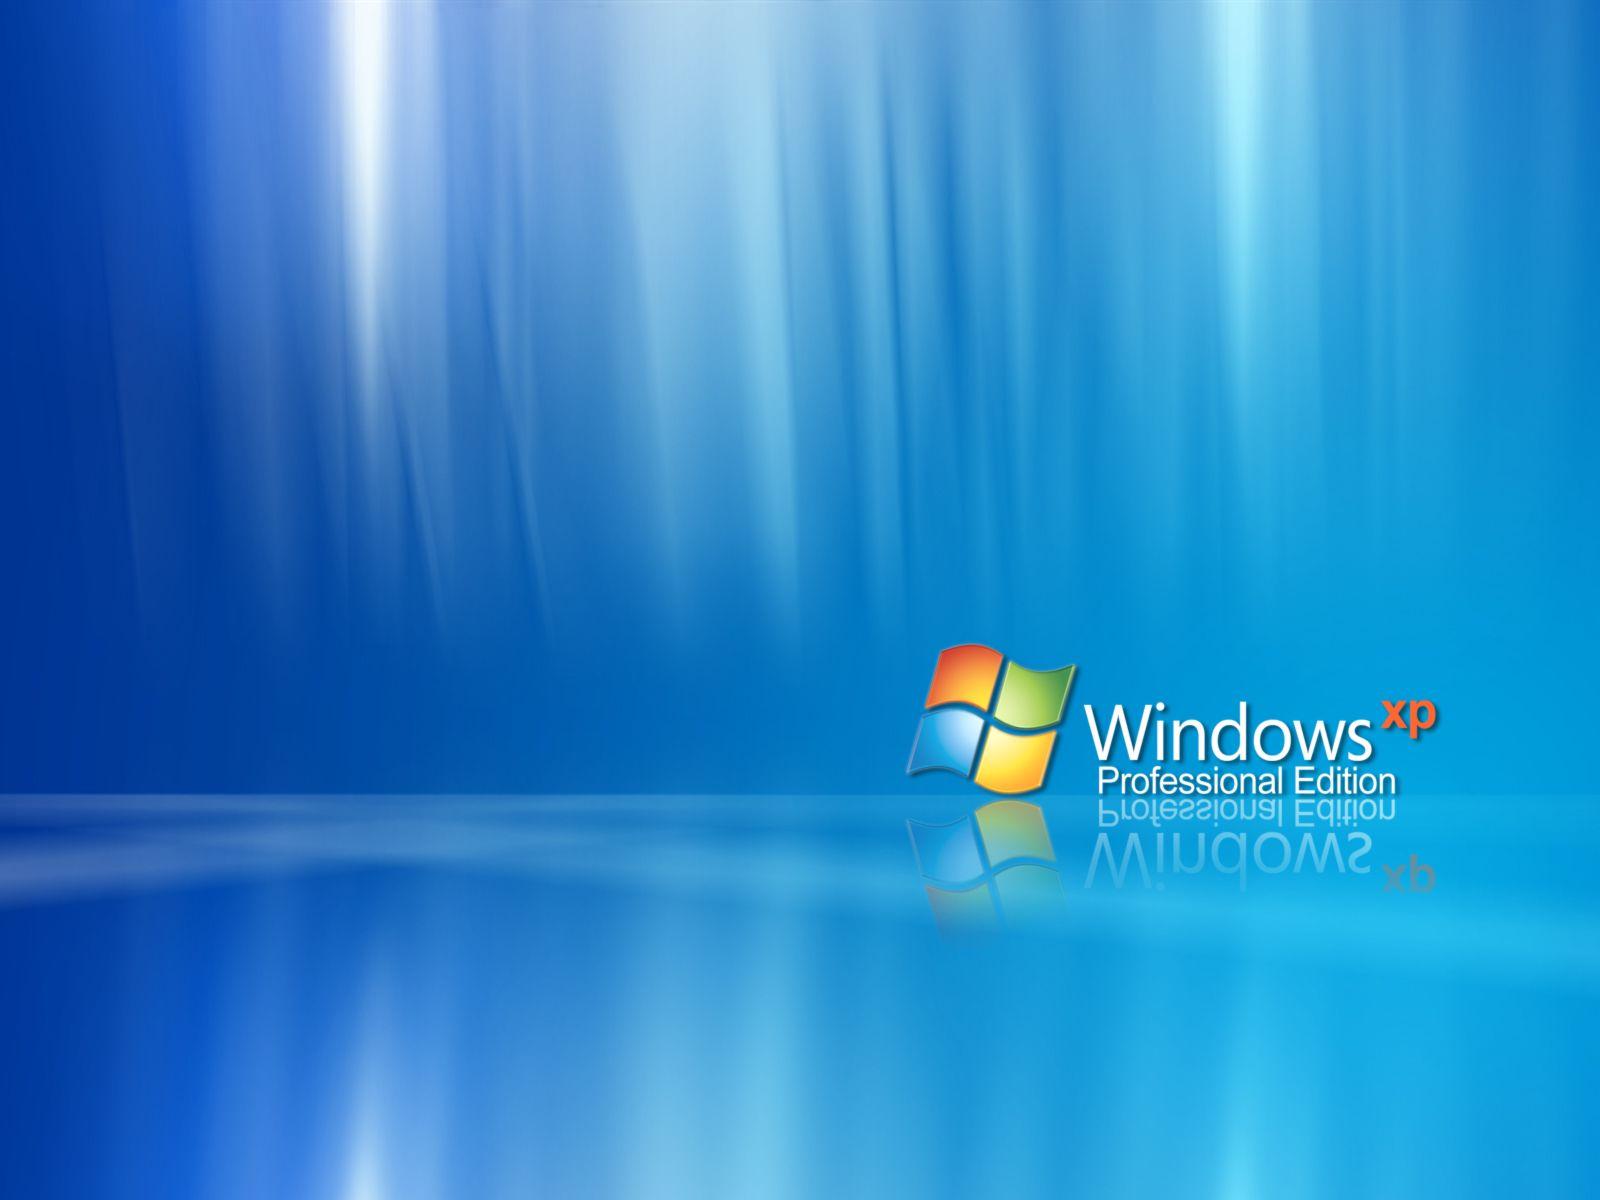 Windows XP Wallpaper Free Download